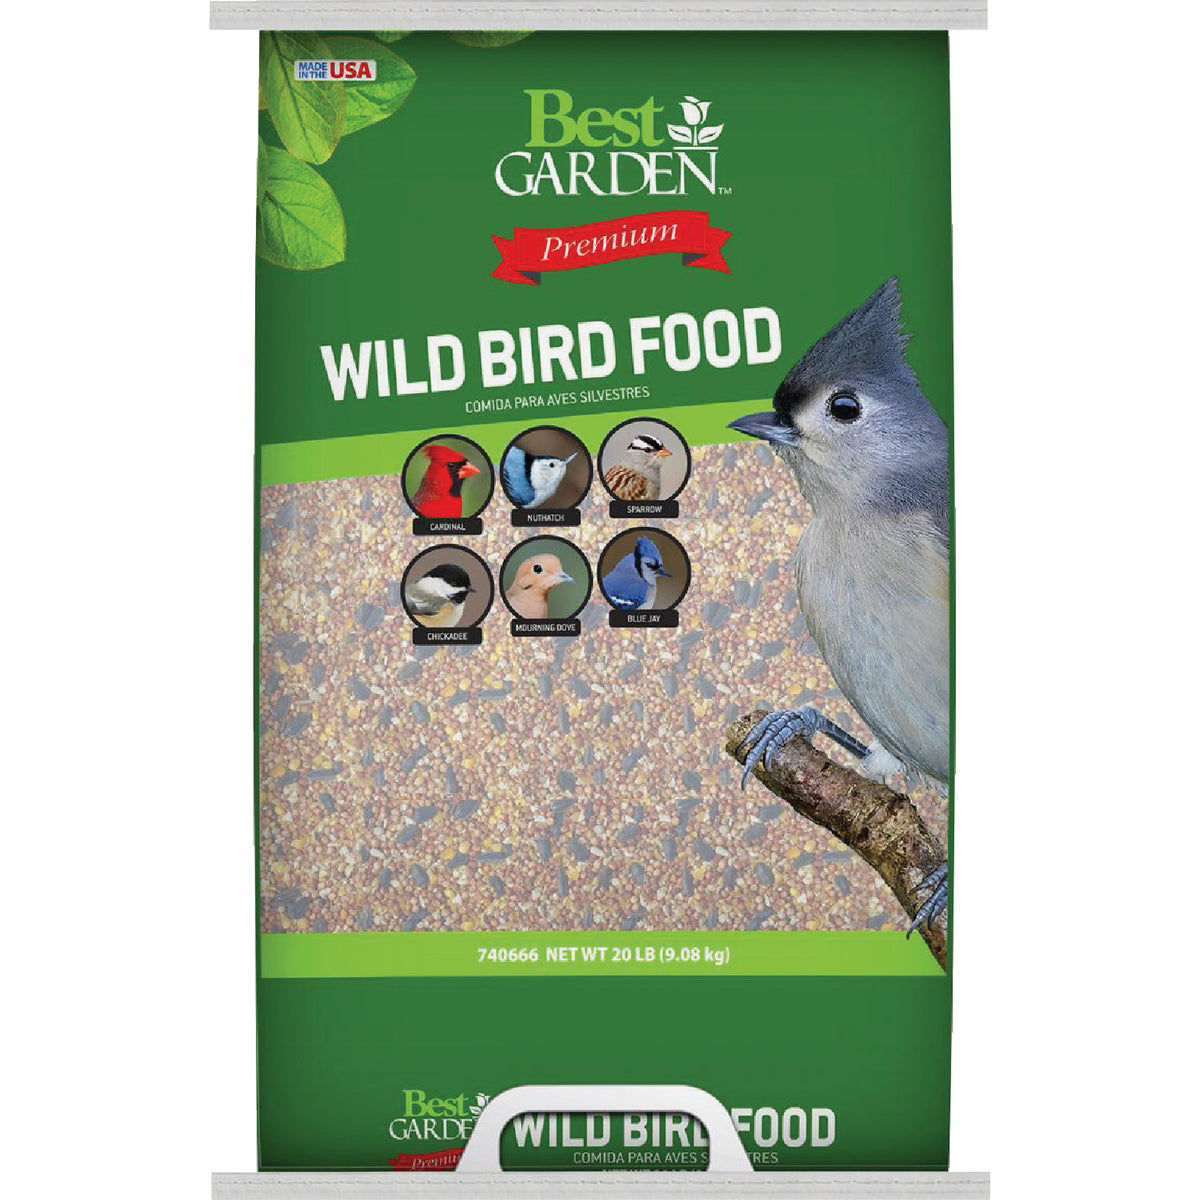 AllOutdoor Review: Fire & Smoke Society - Super Bird Seasoning